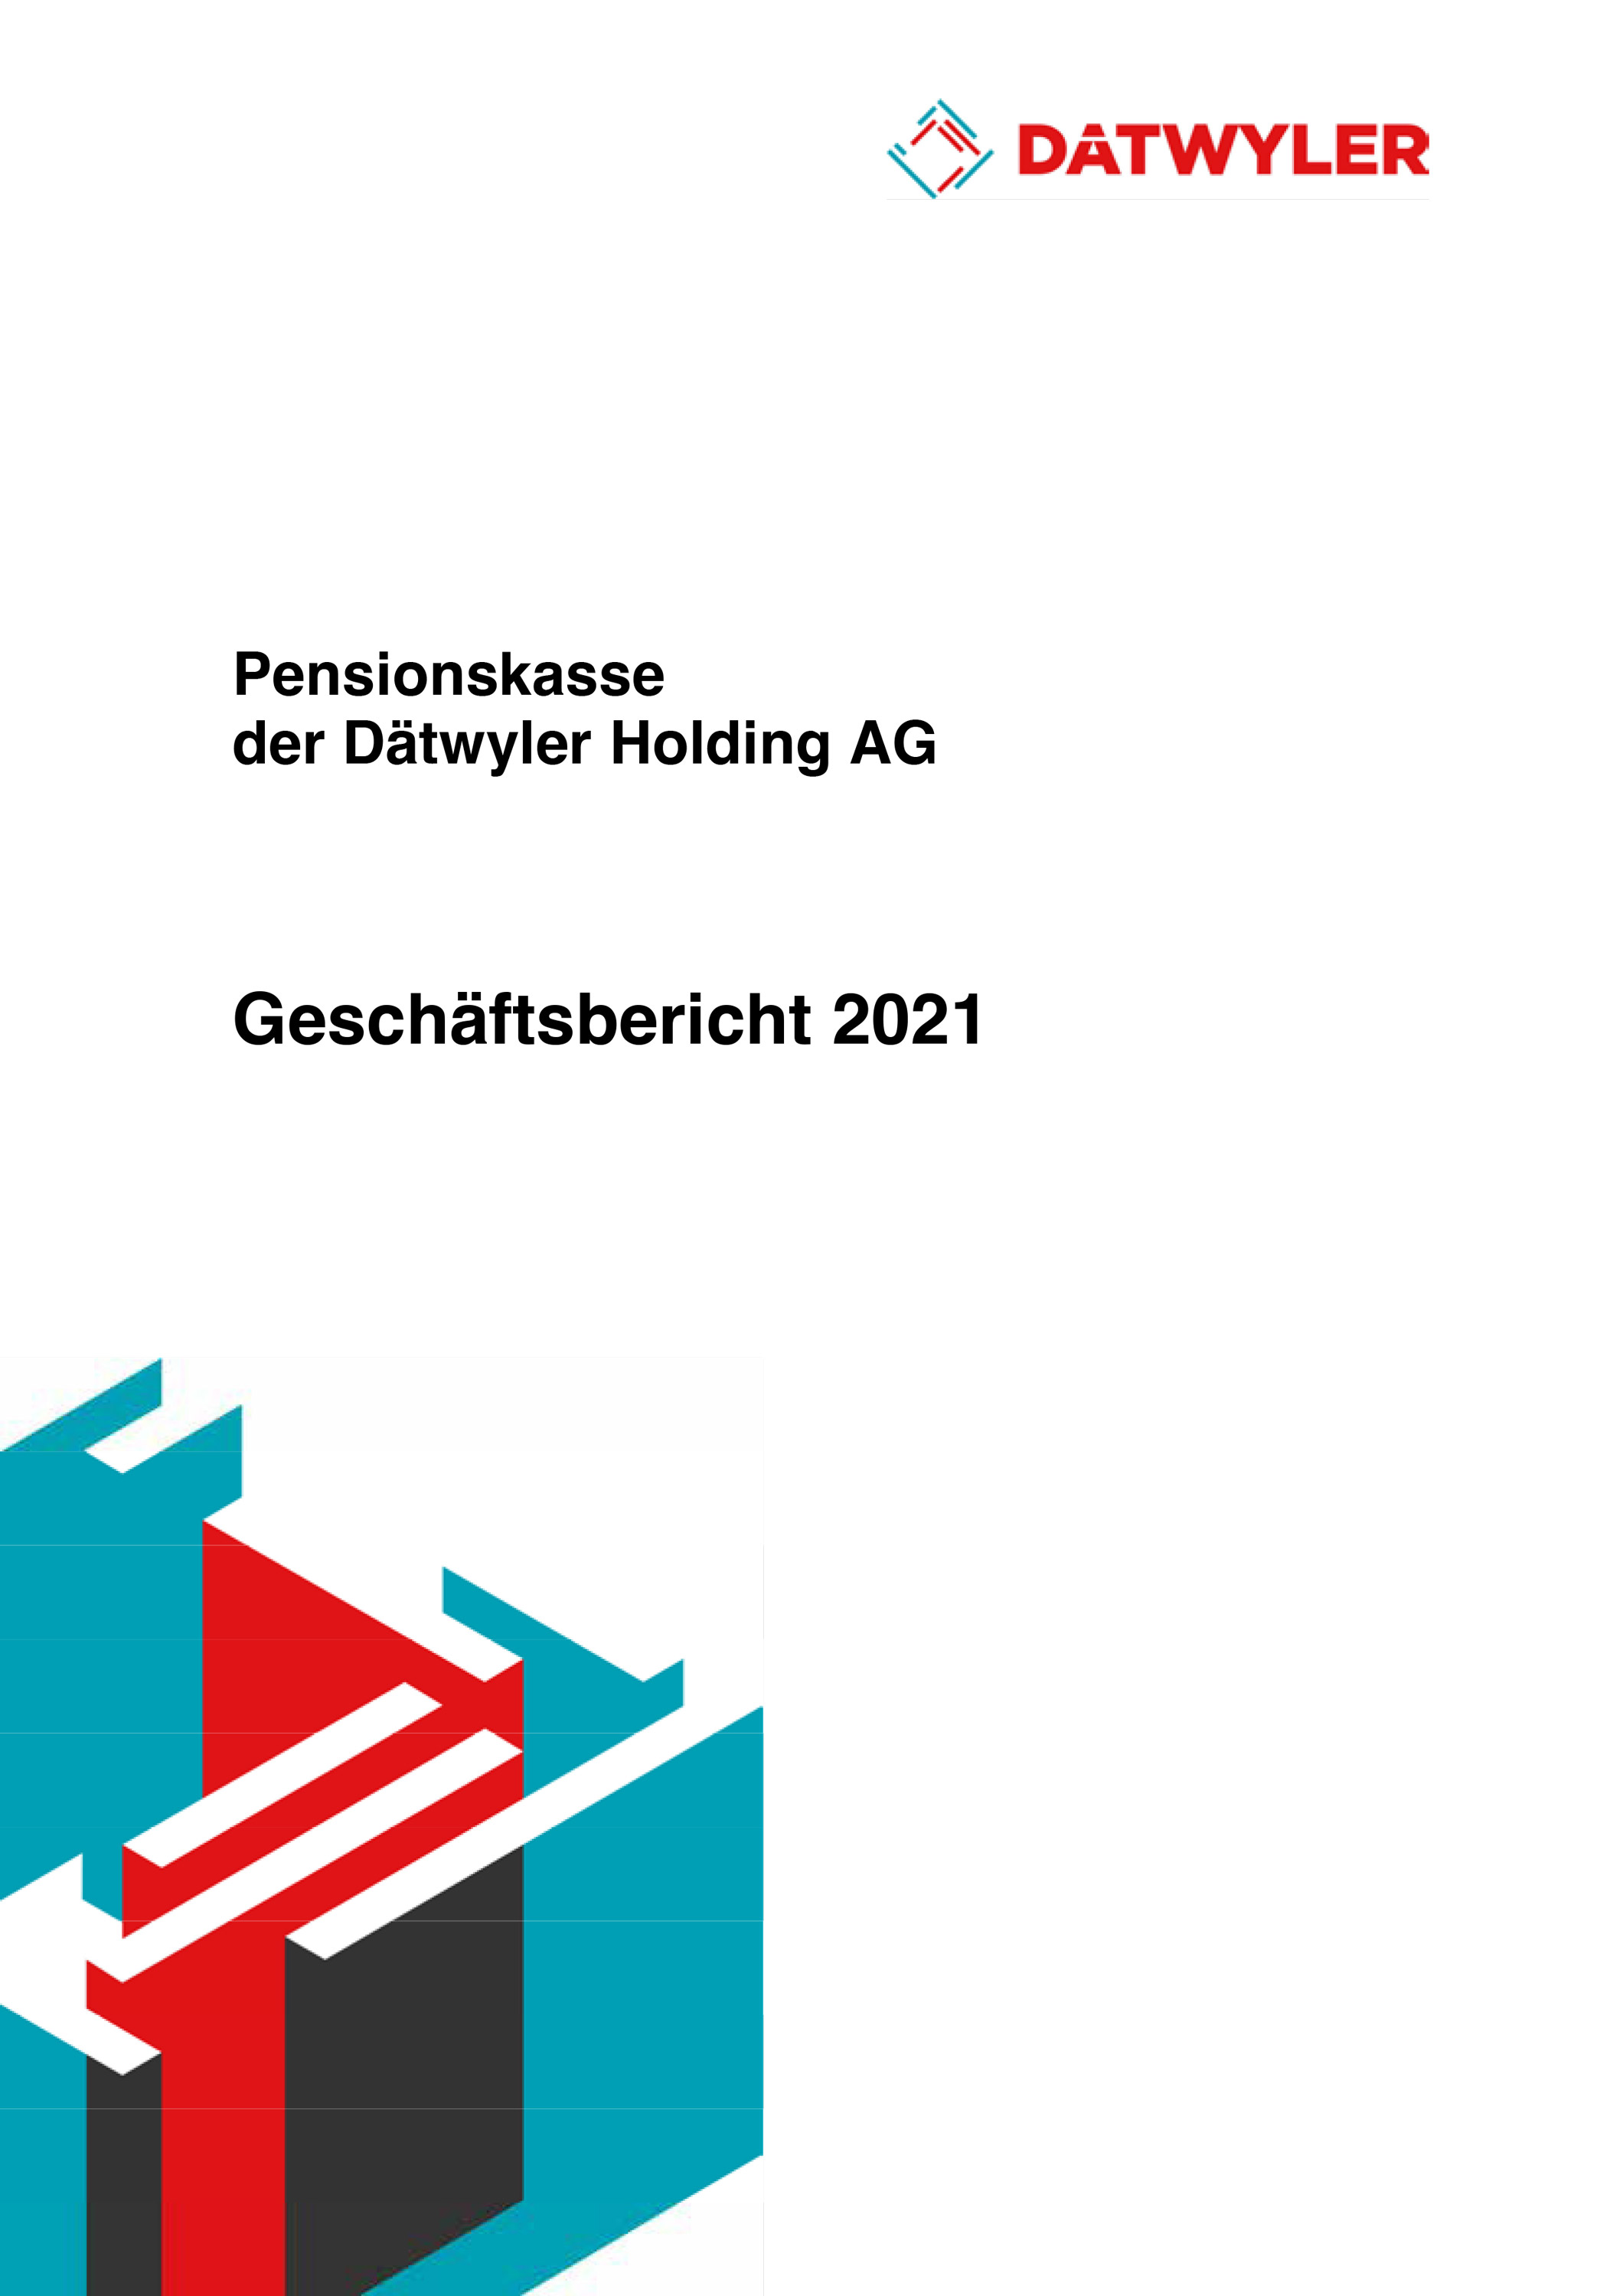 Pension Fund Annual Report 2021